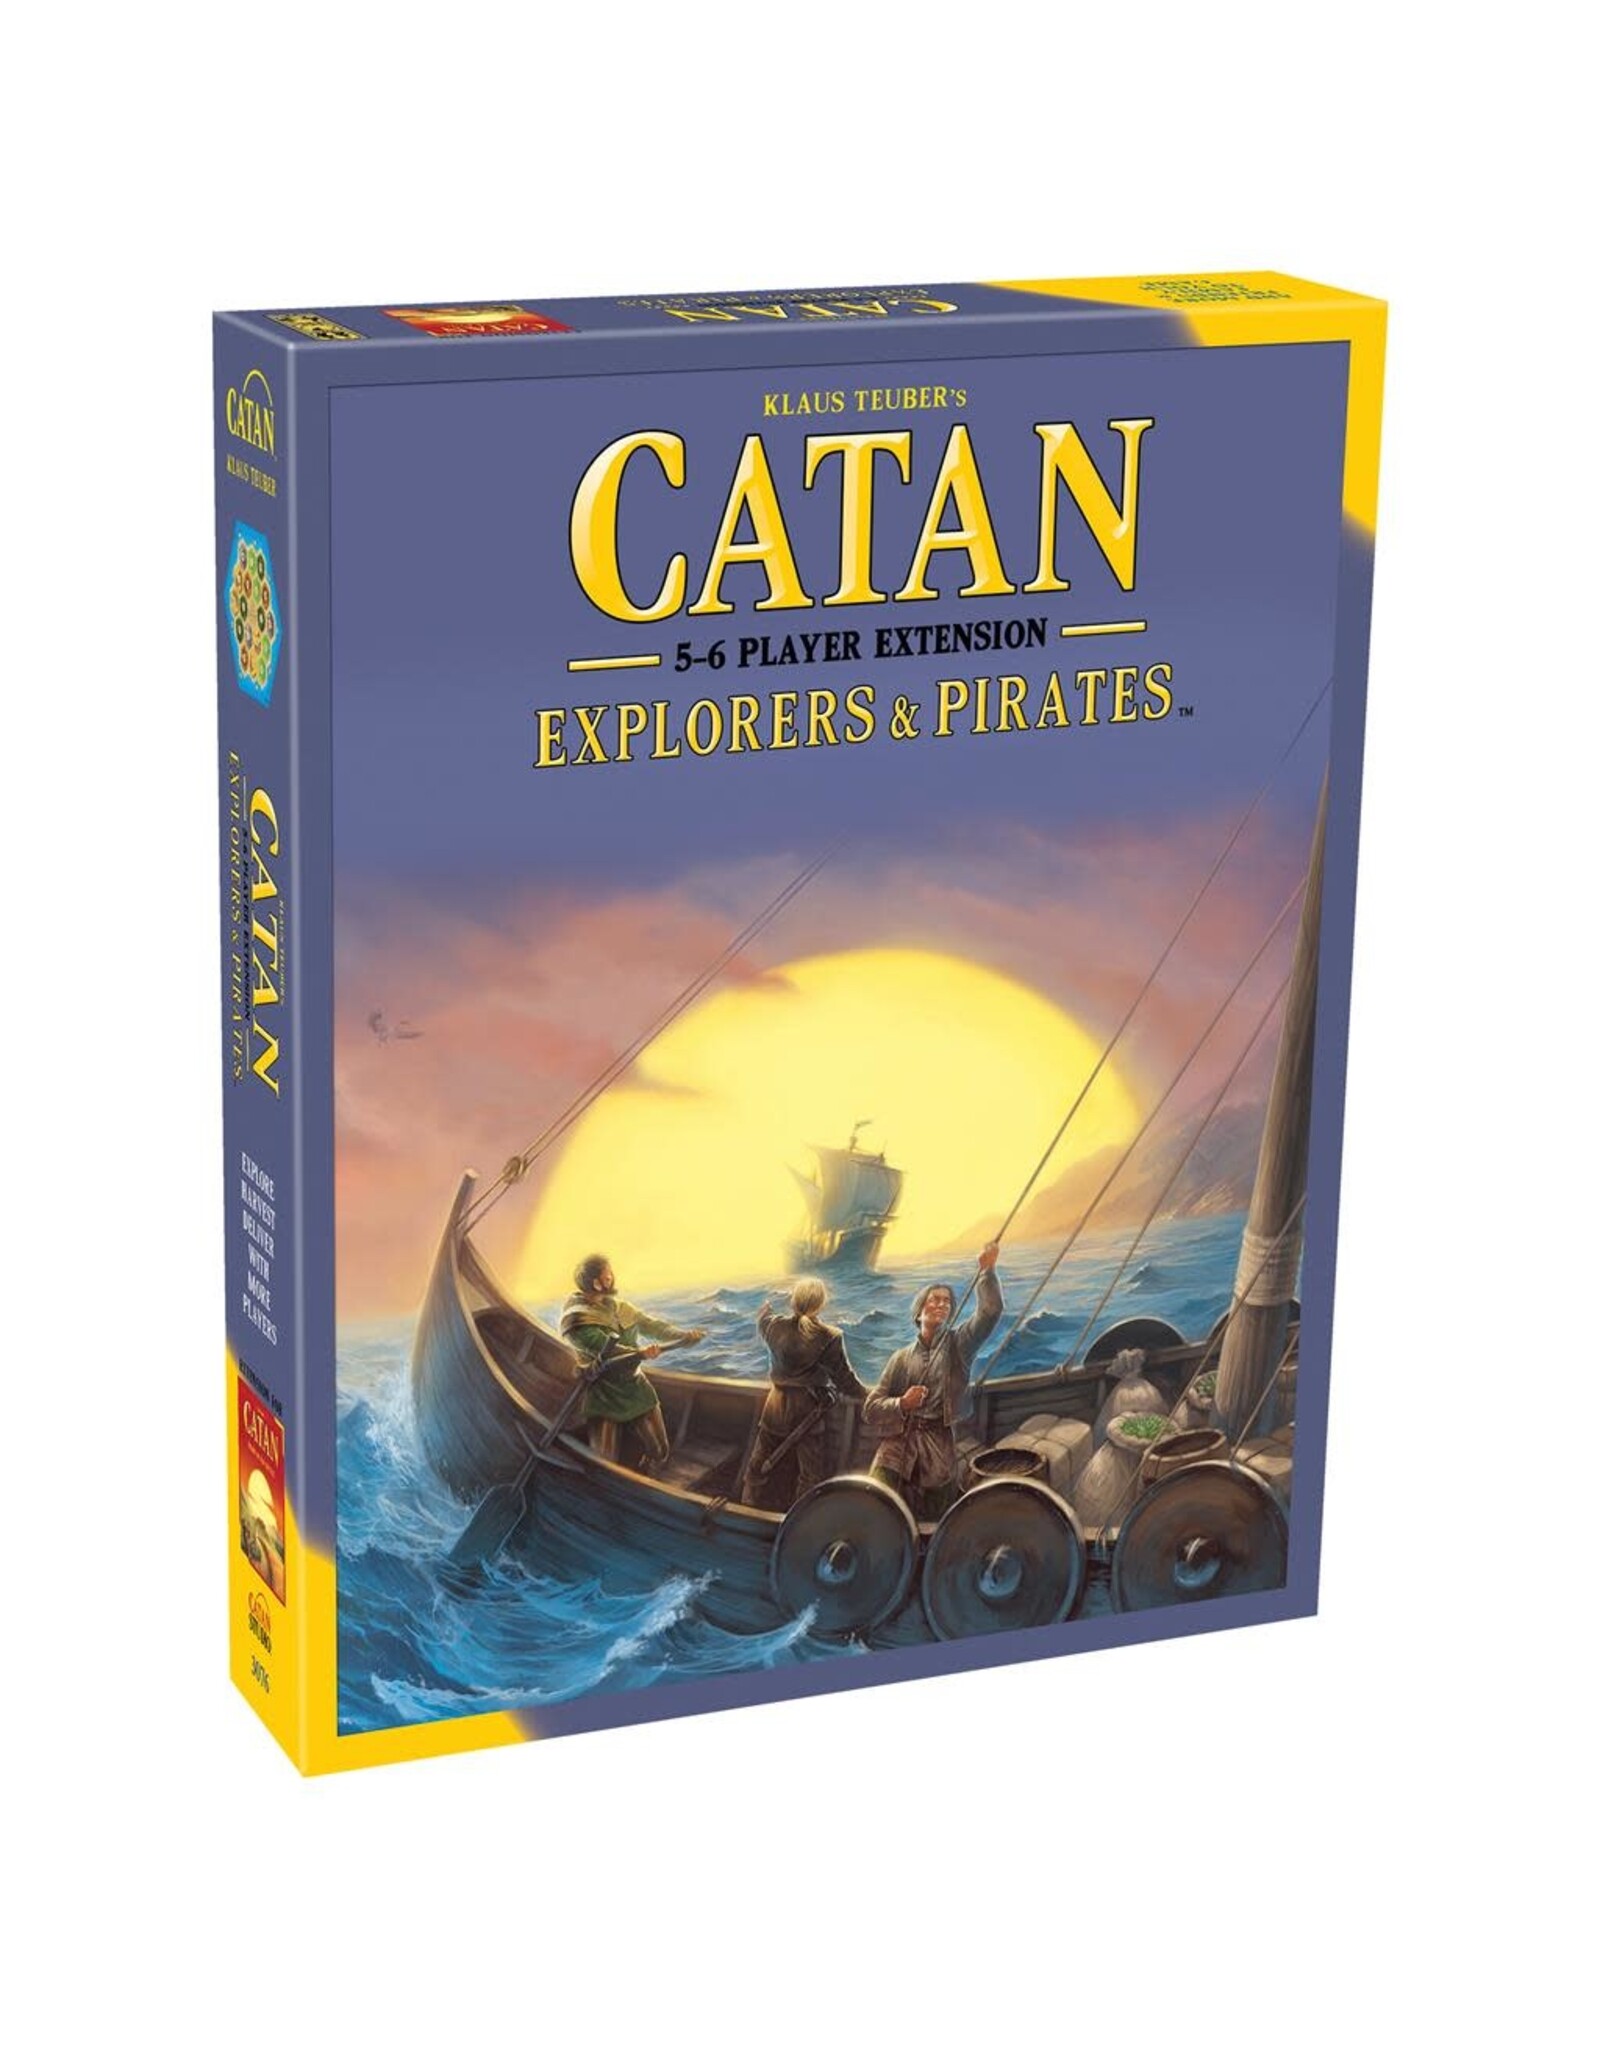 Catan Studio Catan: Explorers & Pirates: 5-6 Player Expansion